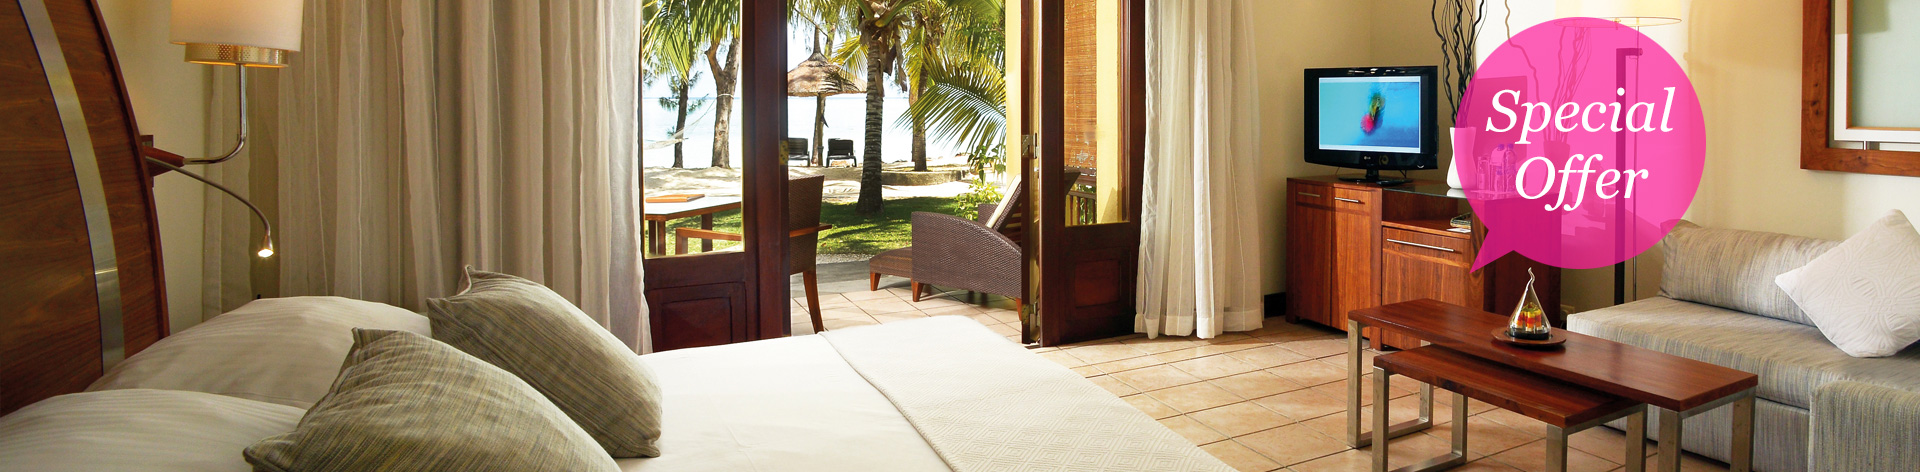 Get 30% DISCOUNT in a 4 & 5 star Hotel in Mauritius